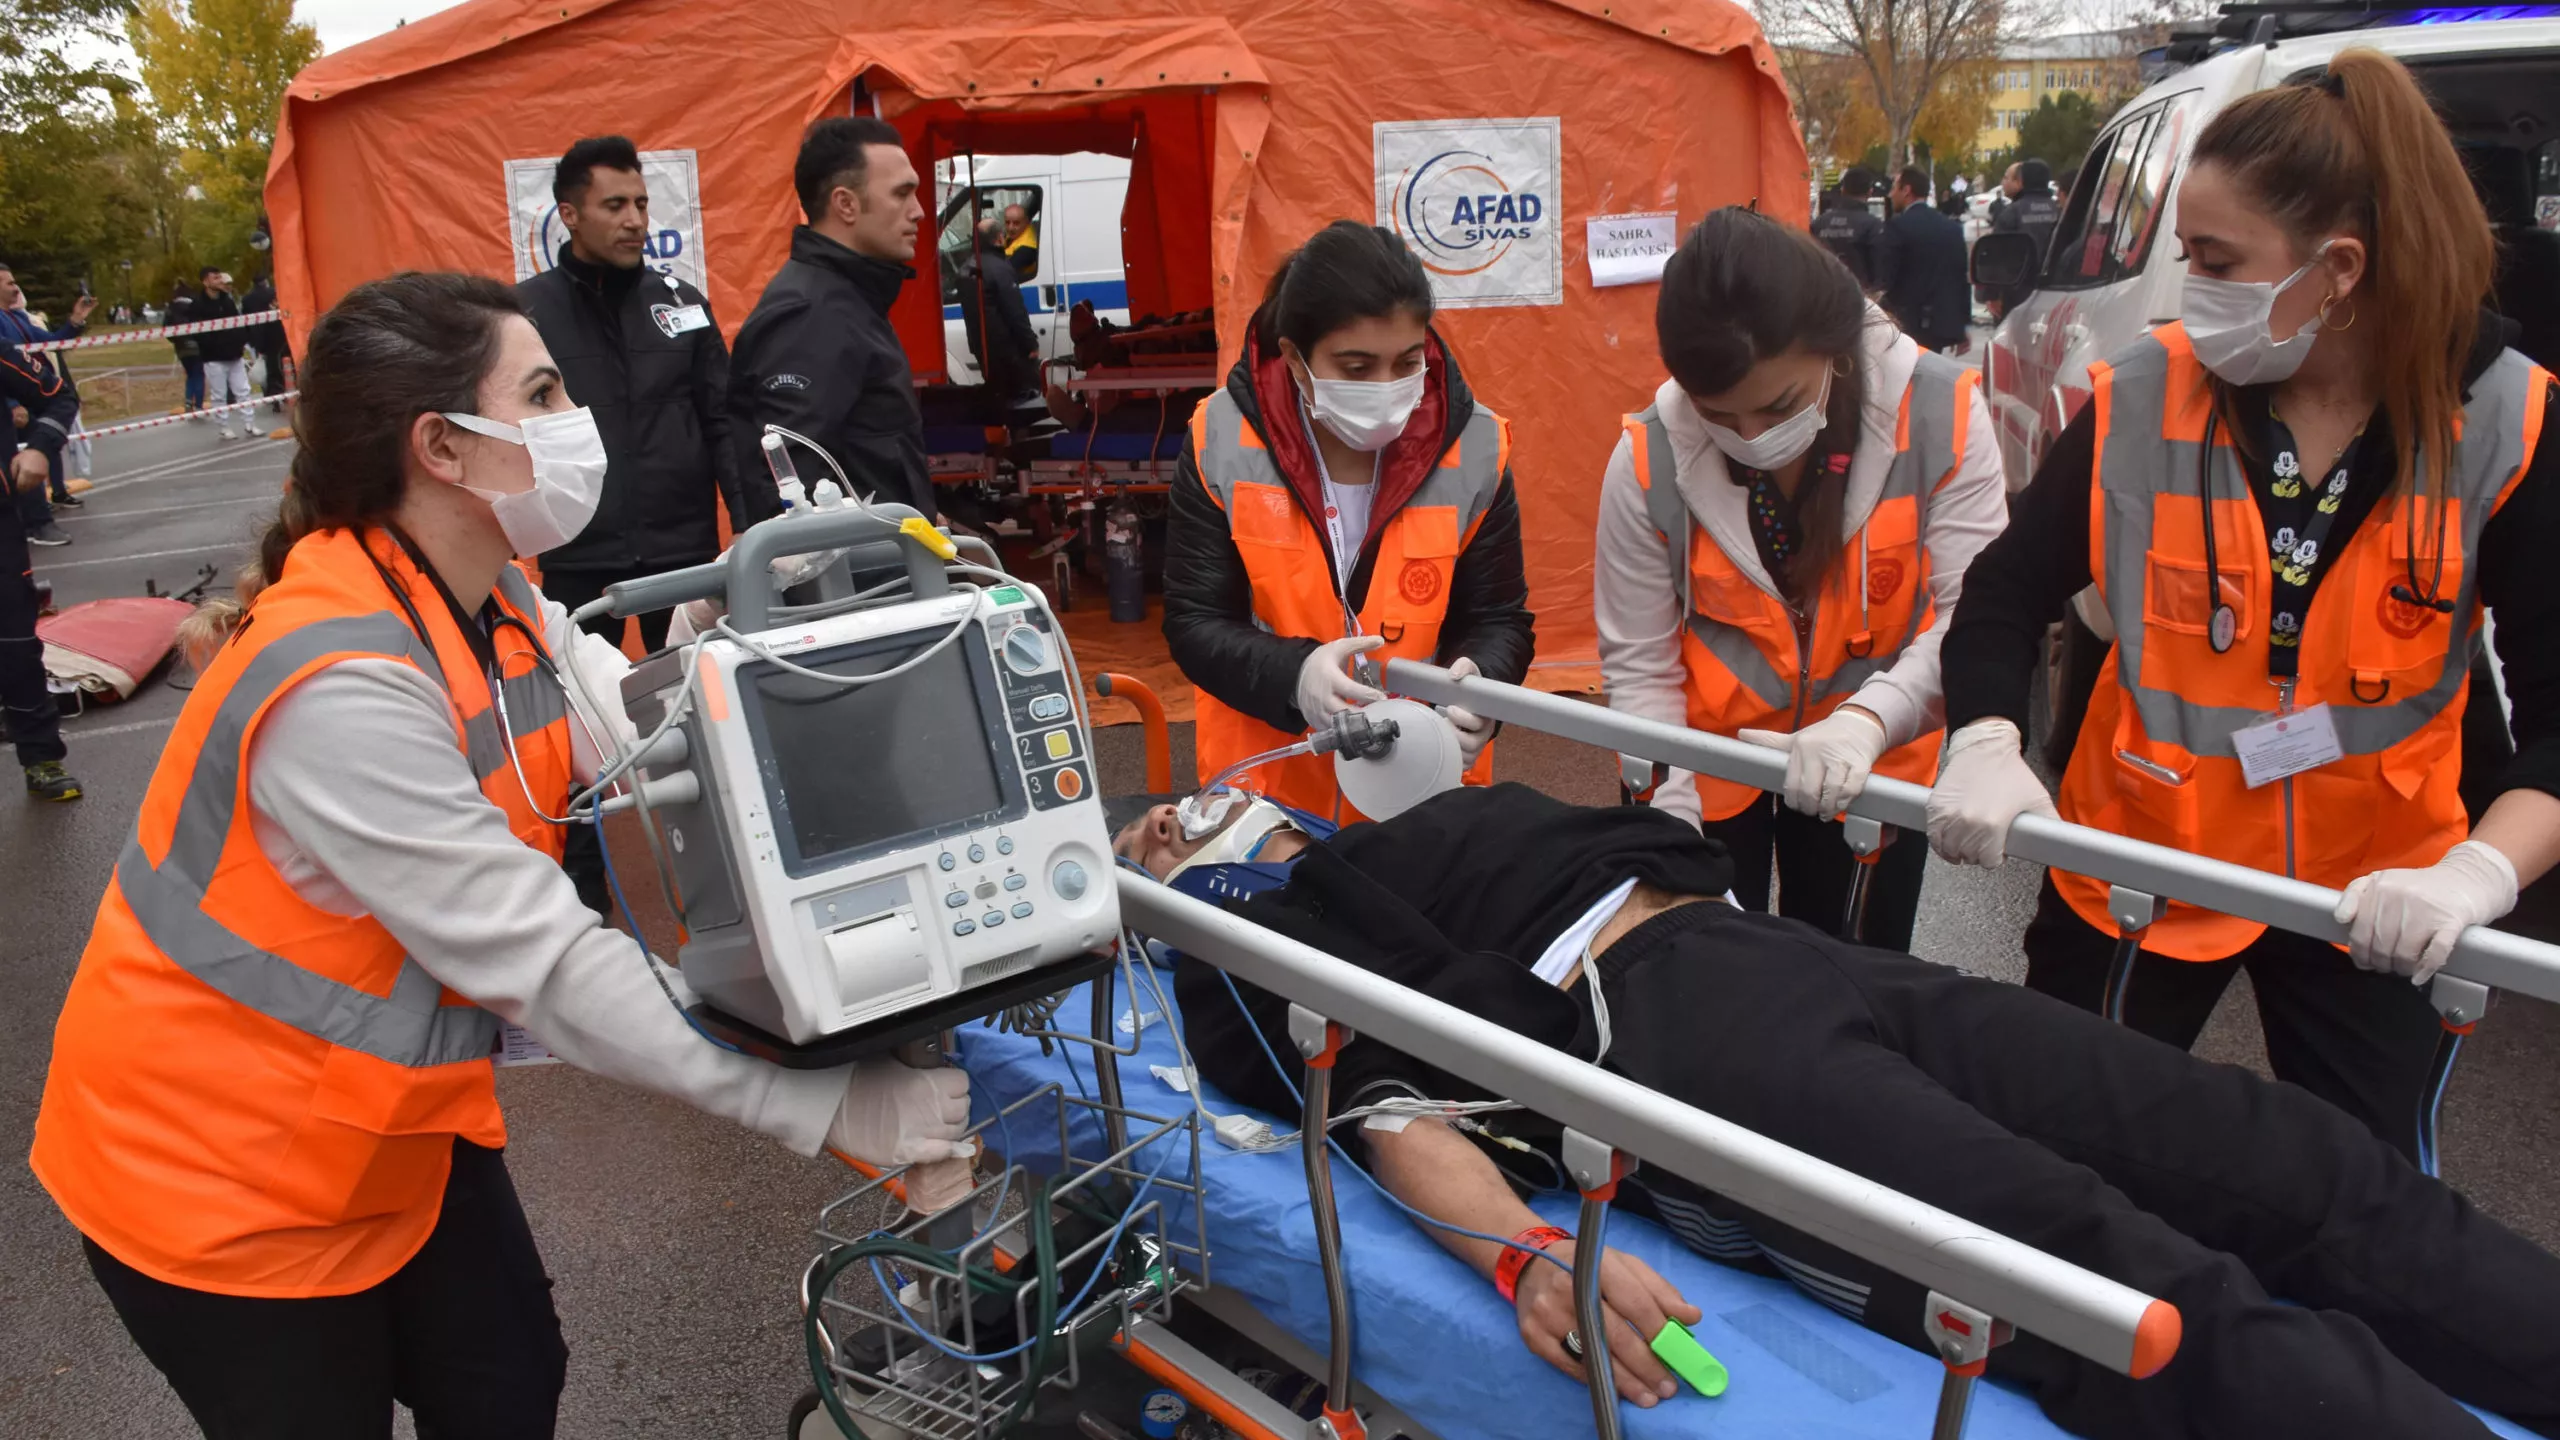 Sivasta hastanede deprem ve yangin tatbikatia scaled - yerel haberler - haberton